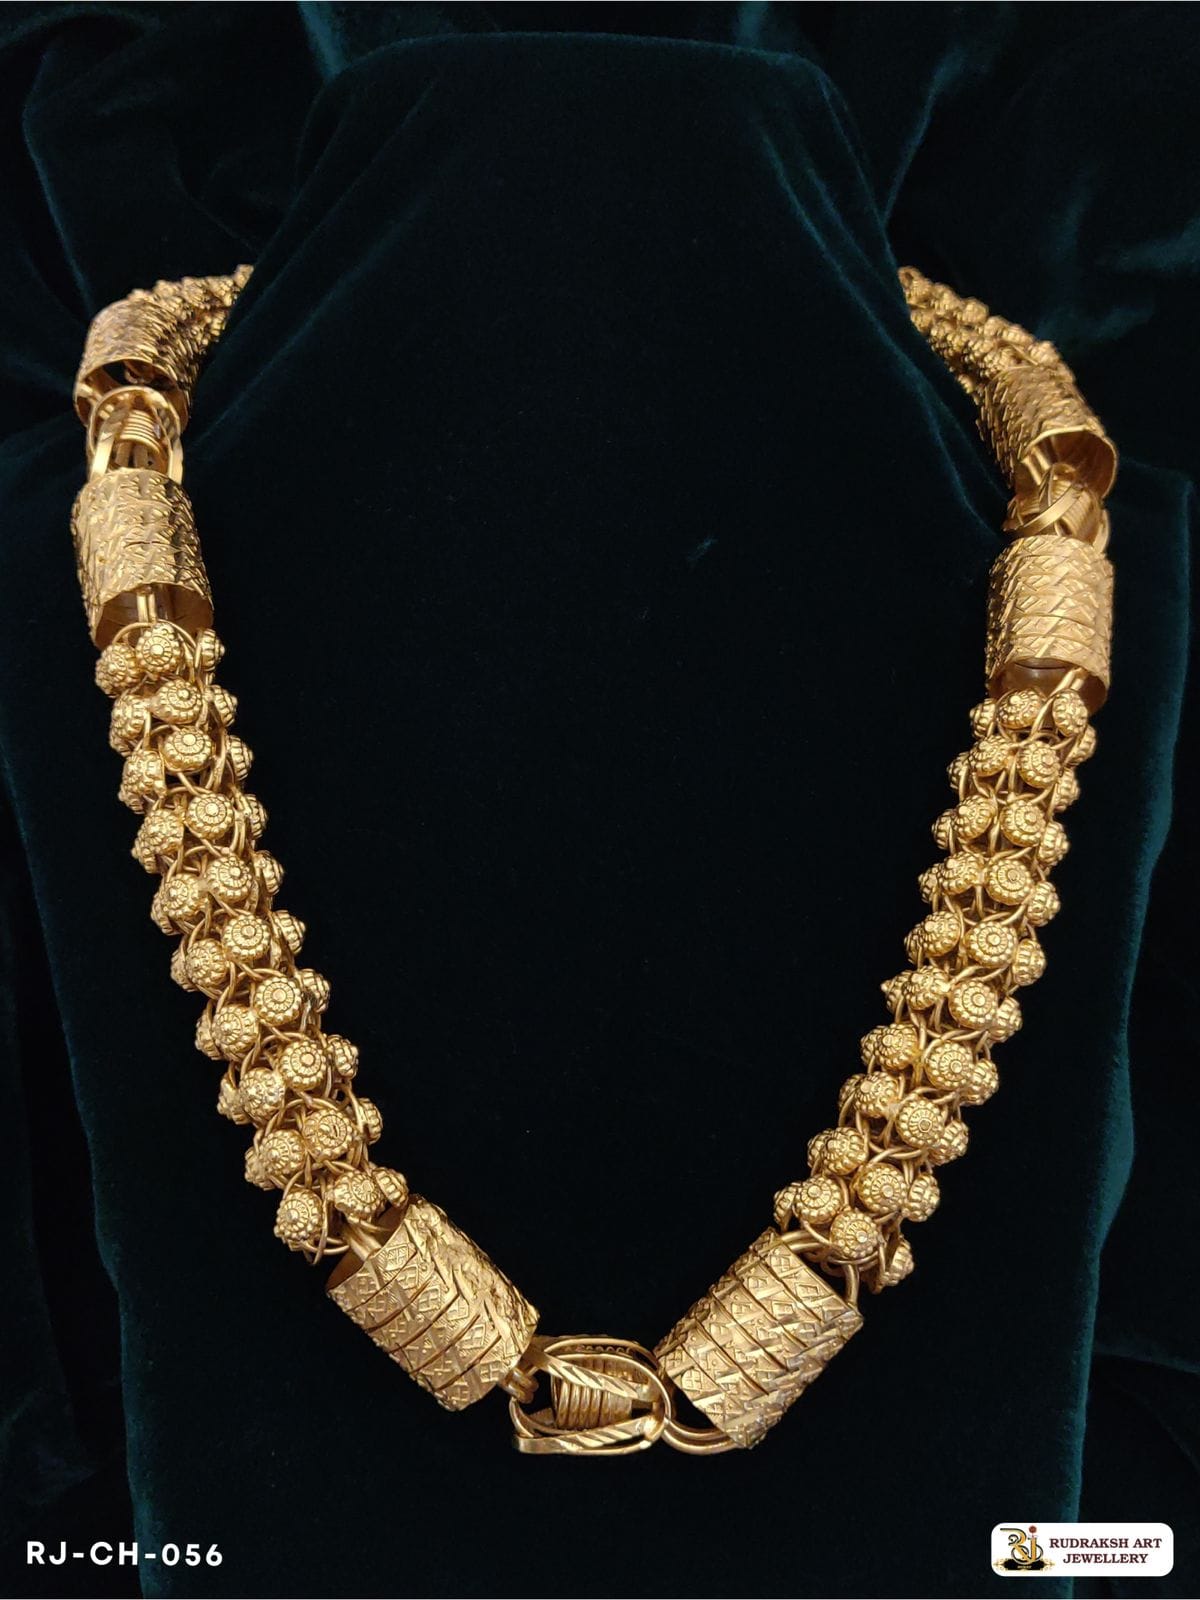 Jumbo Rajwadi Cape with Spring Chain for Men Rudraksh Art Jewellery